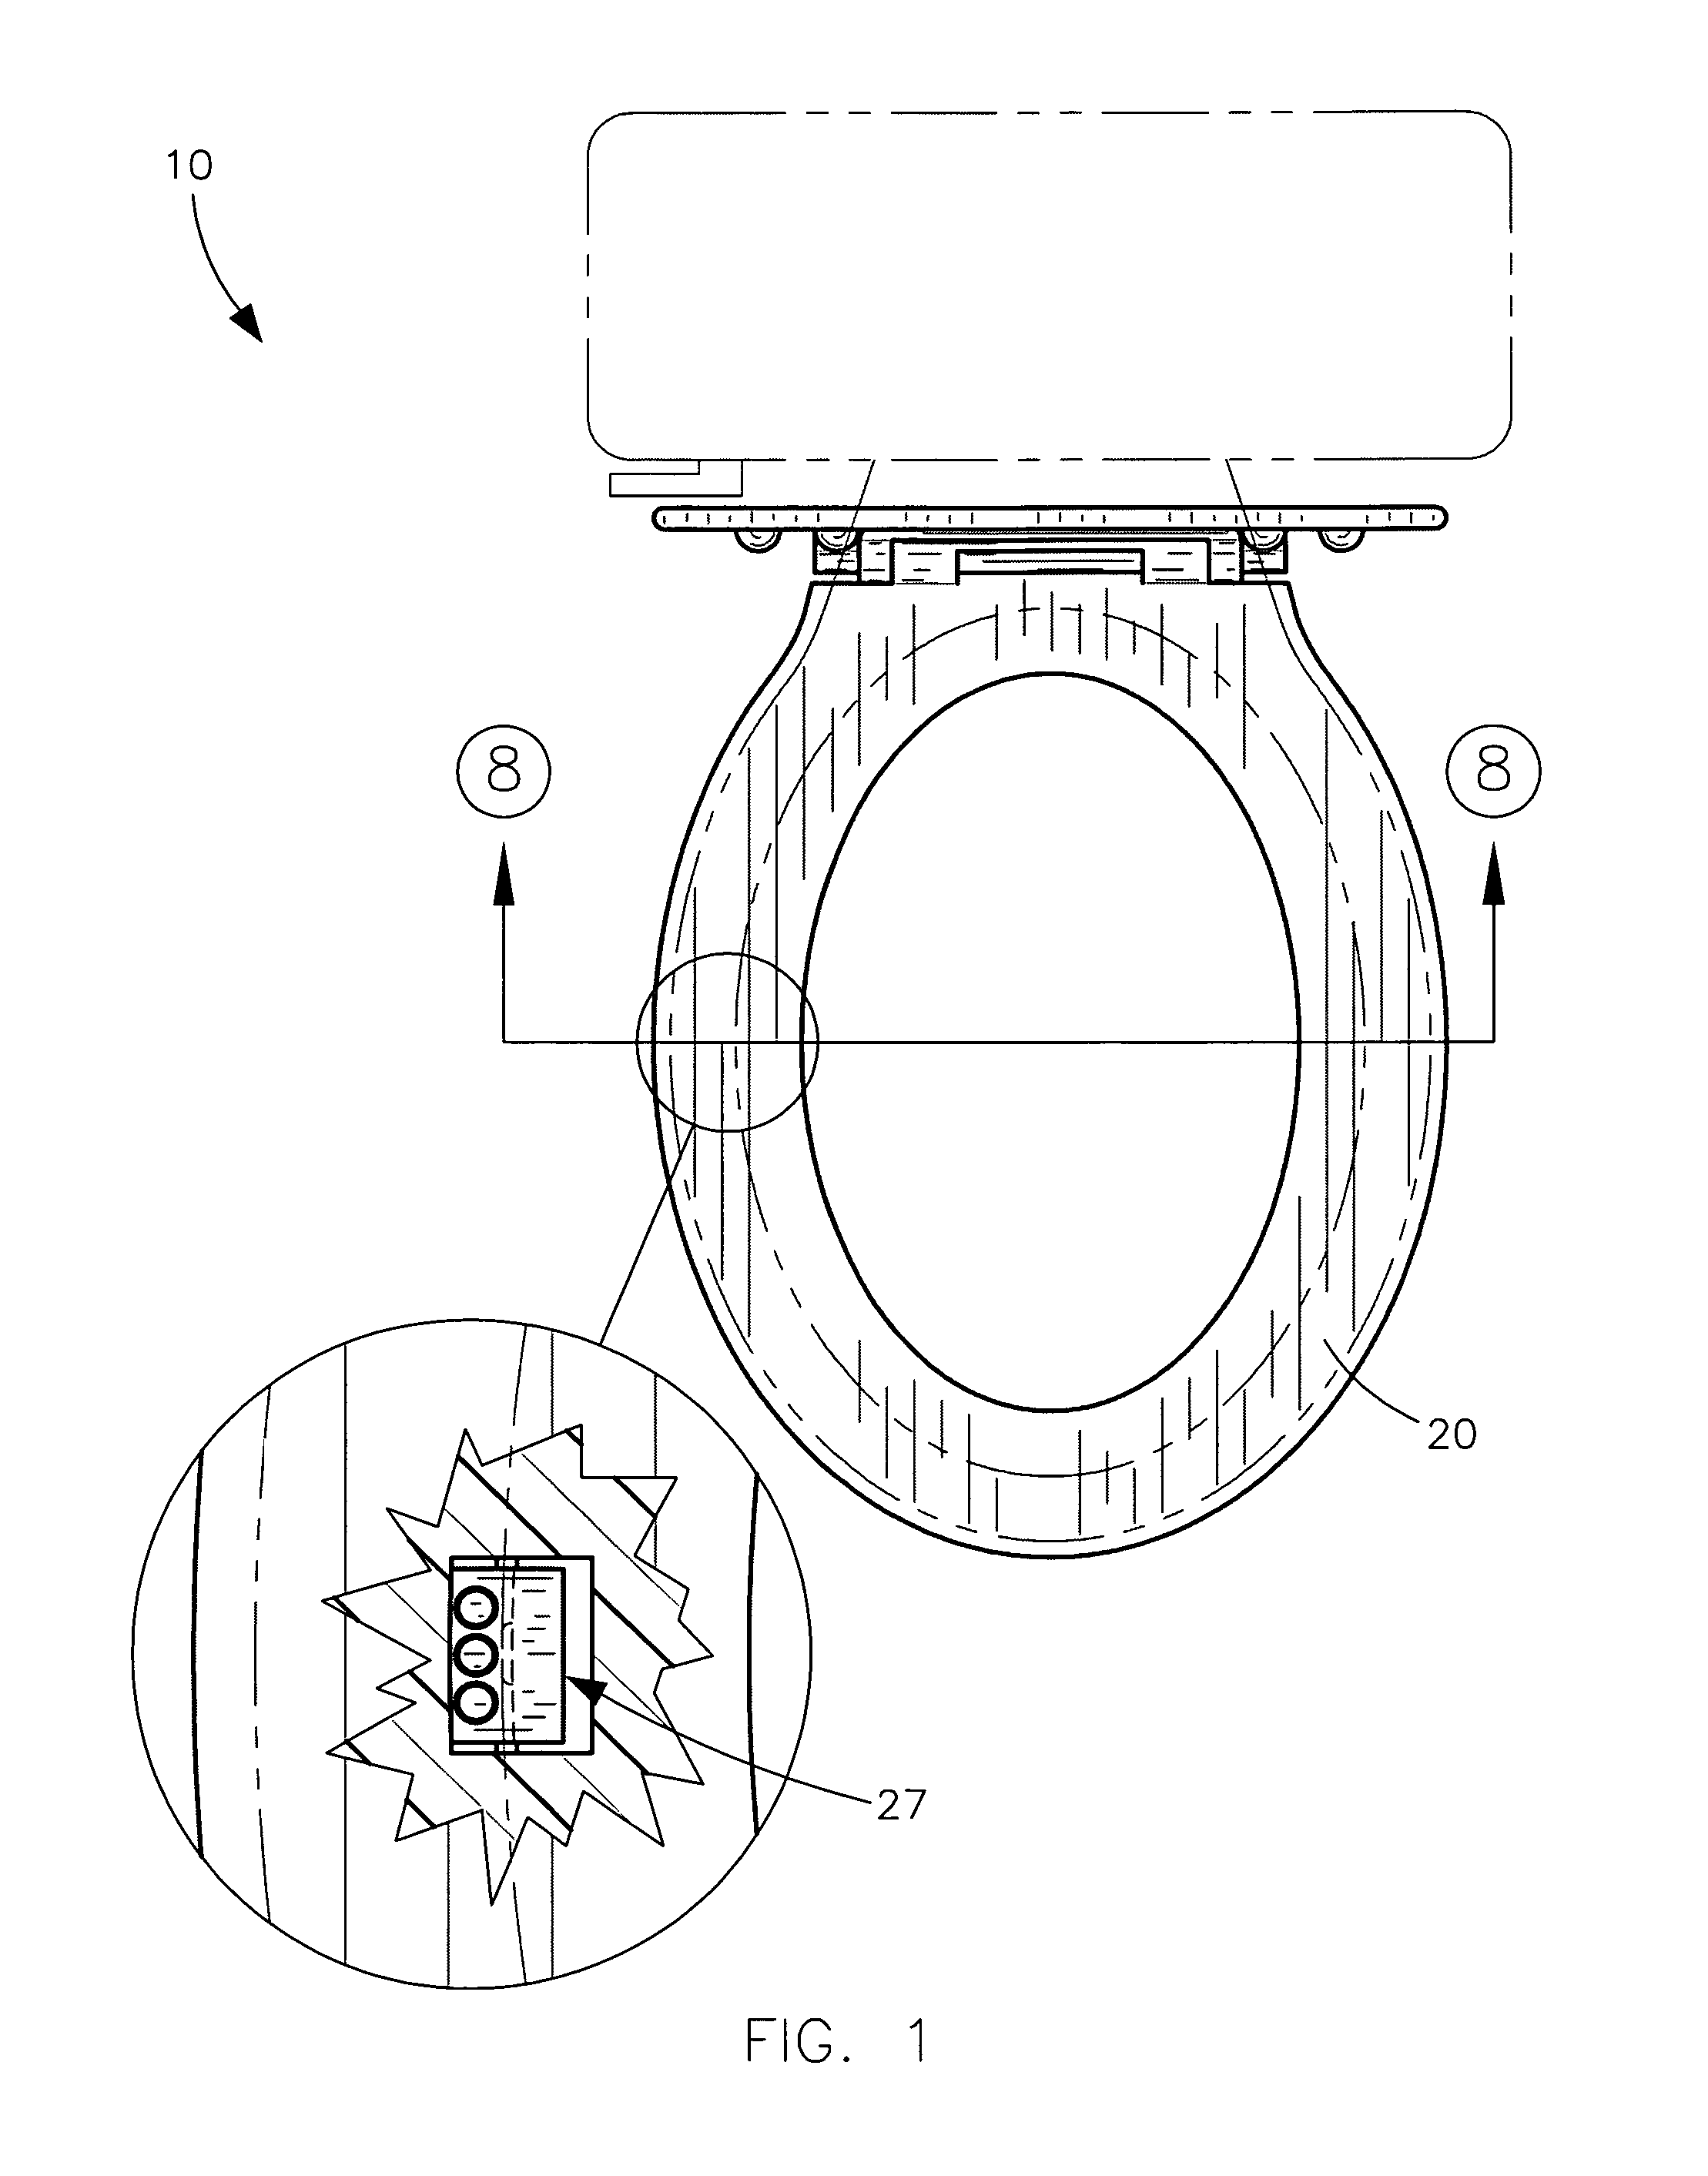 Custom-fit toilet seat and associated method